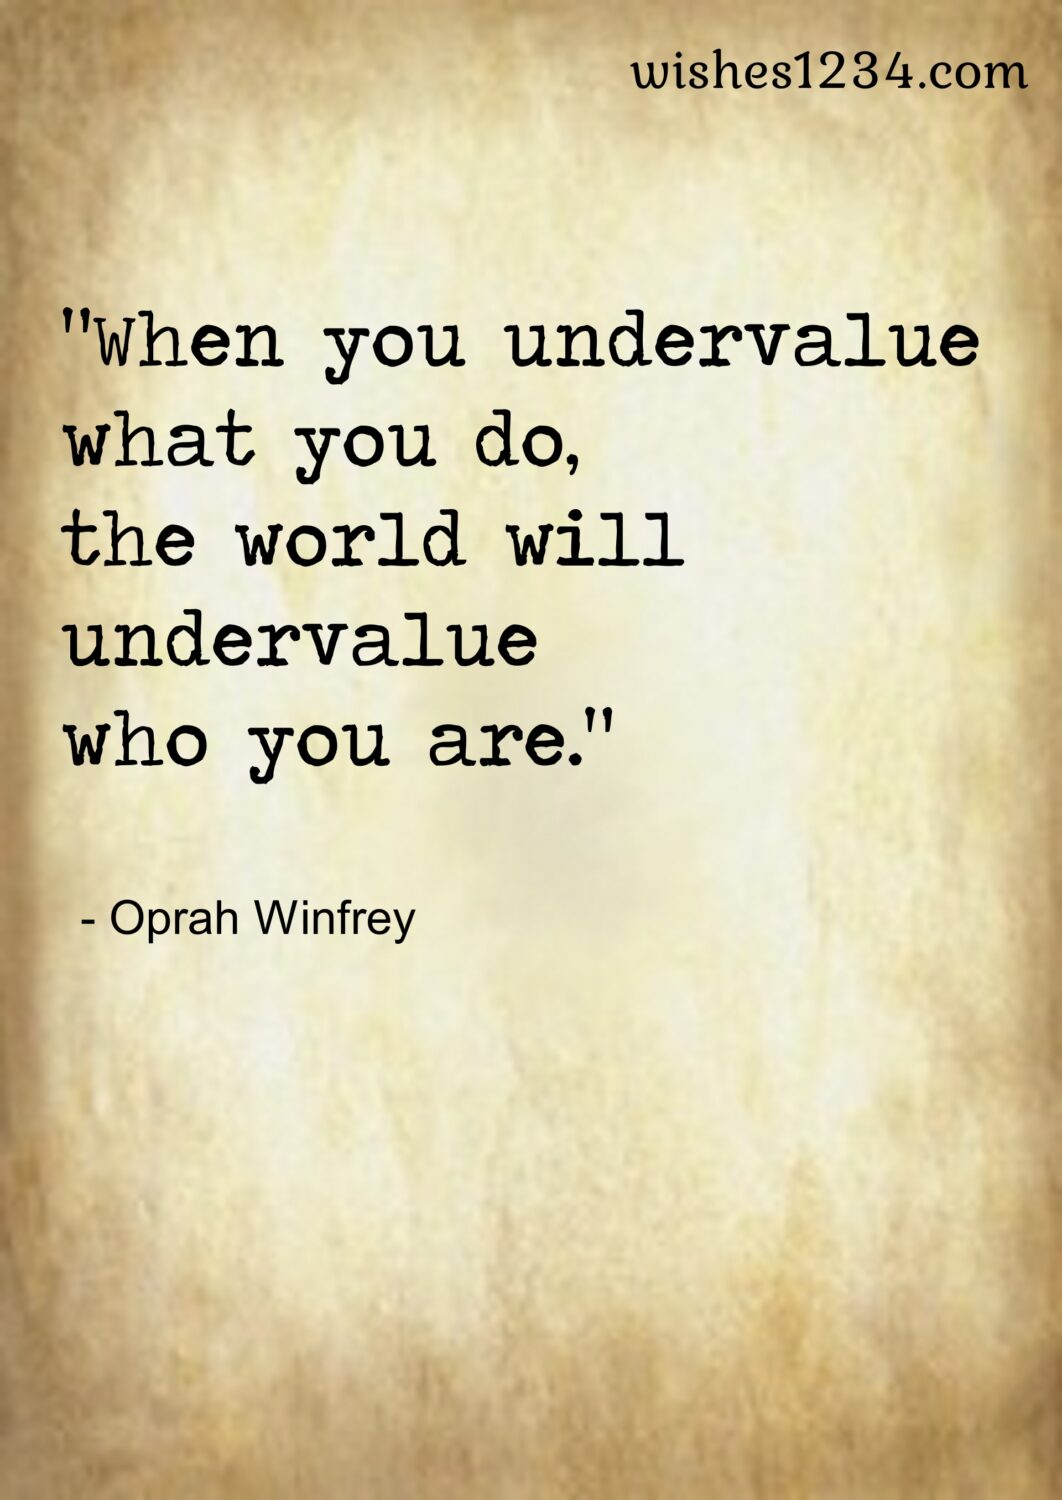 Oprah Winfrey quote, Super motivational quotes | Unique quotes on life.